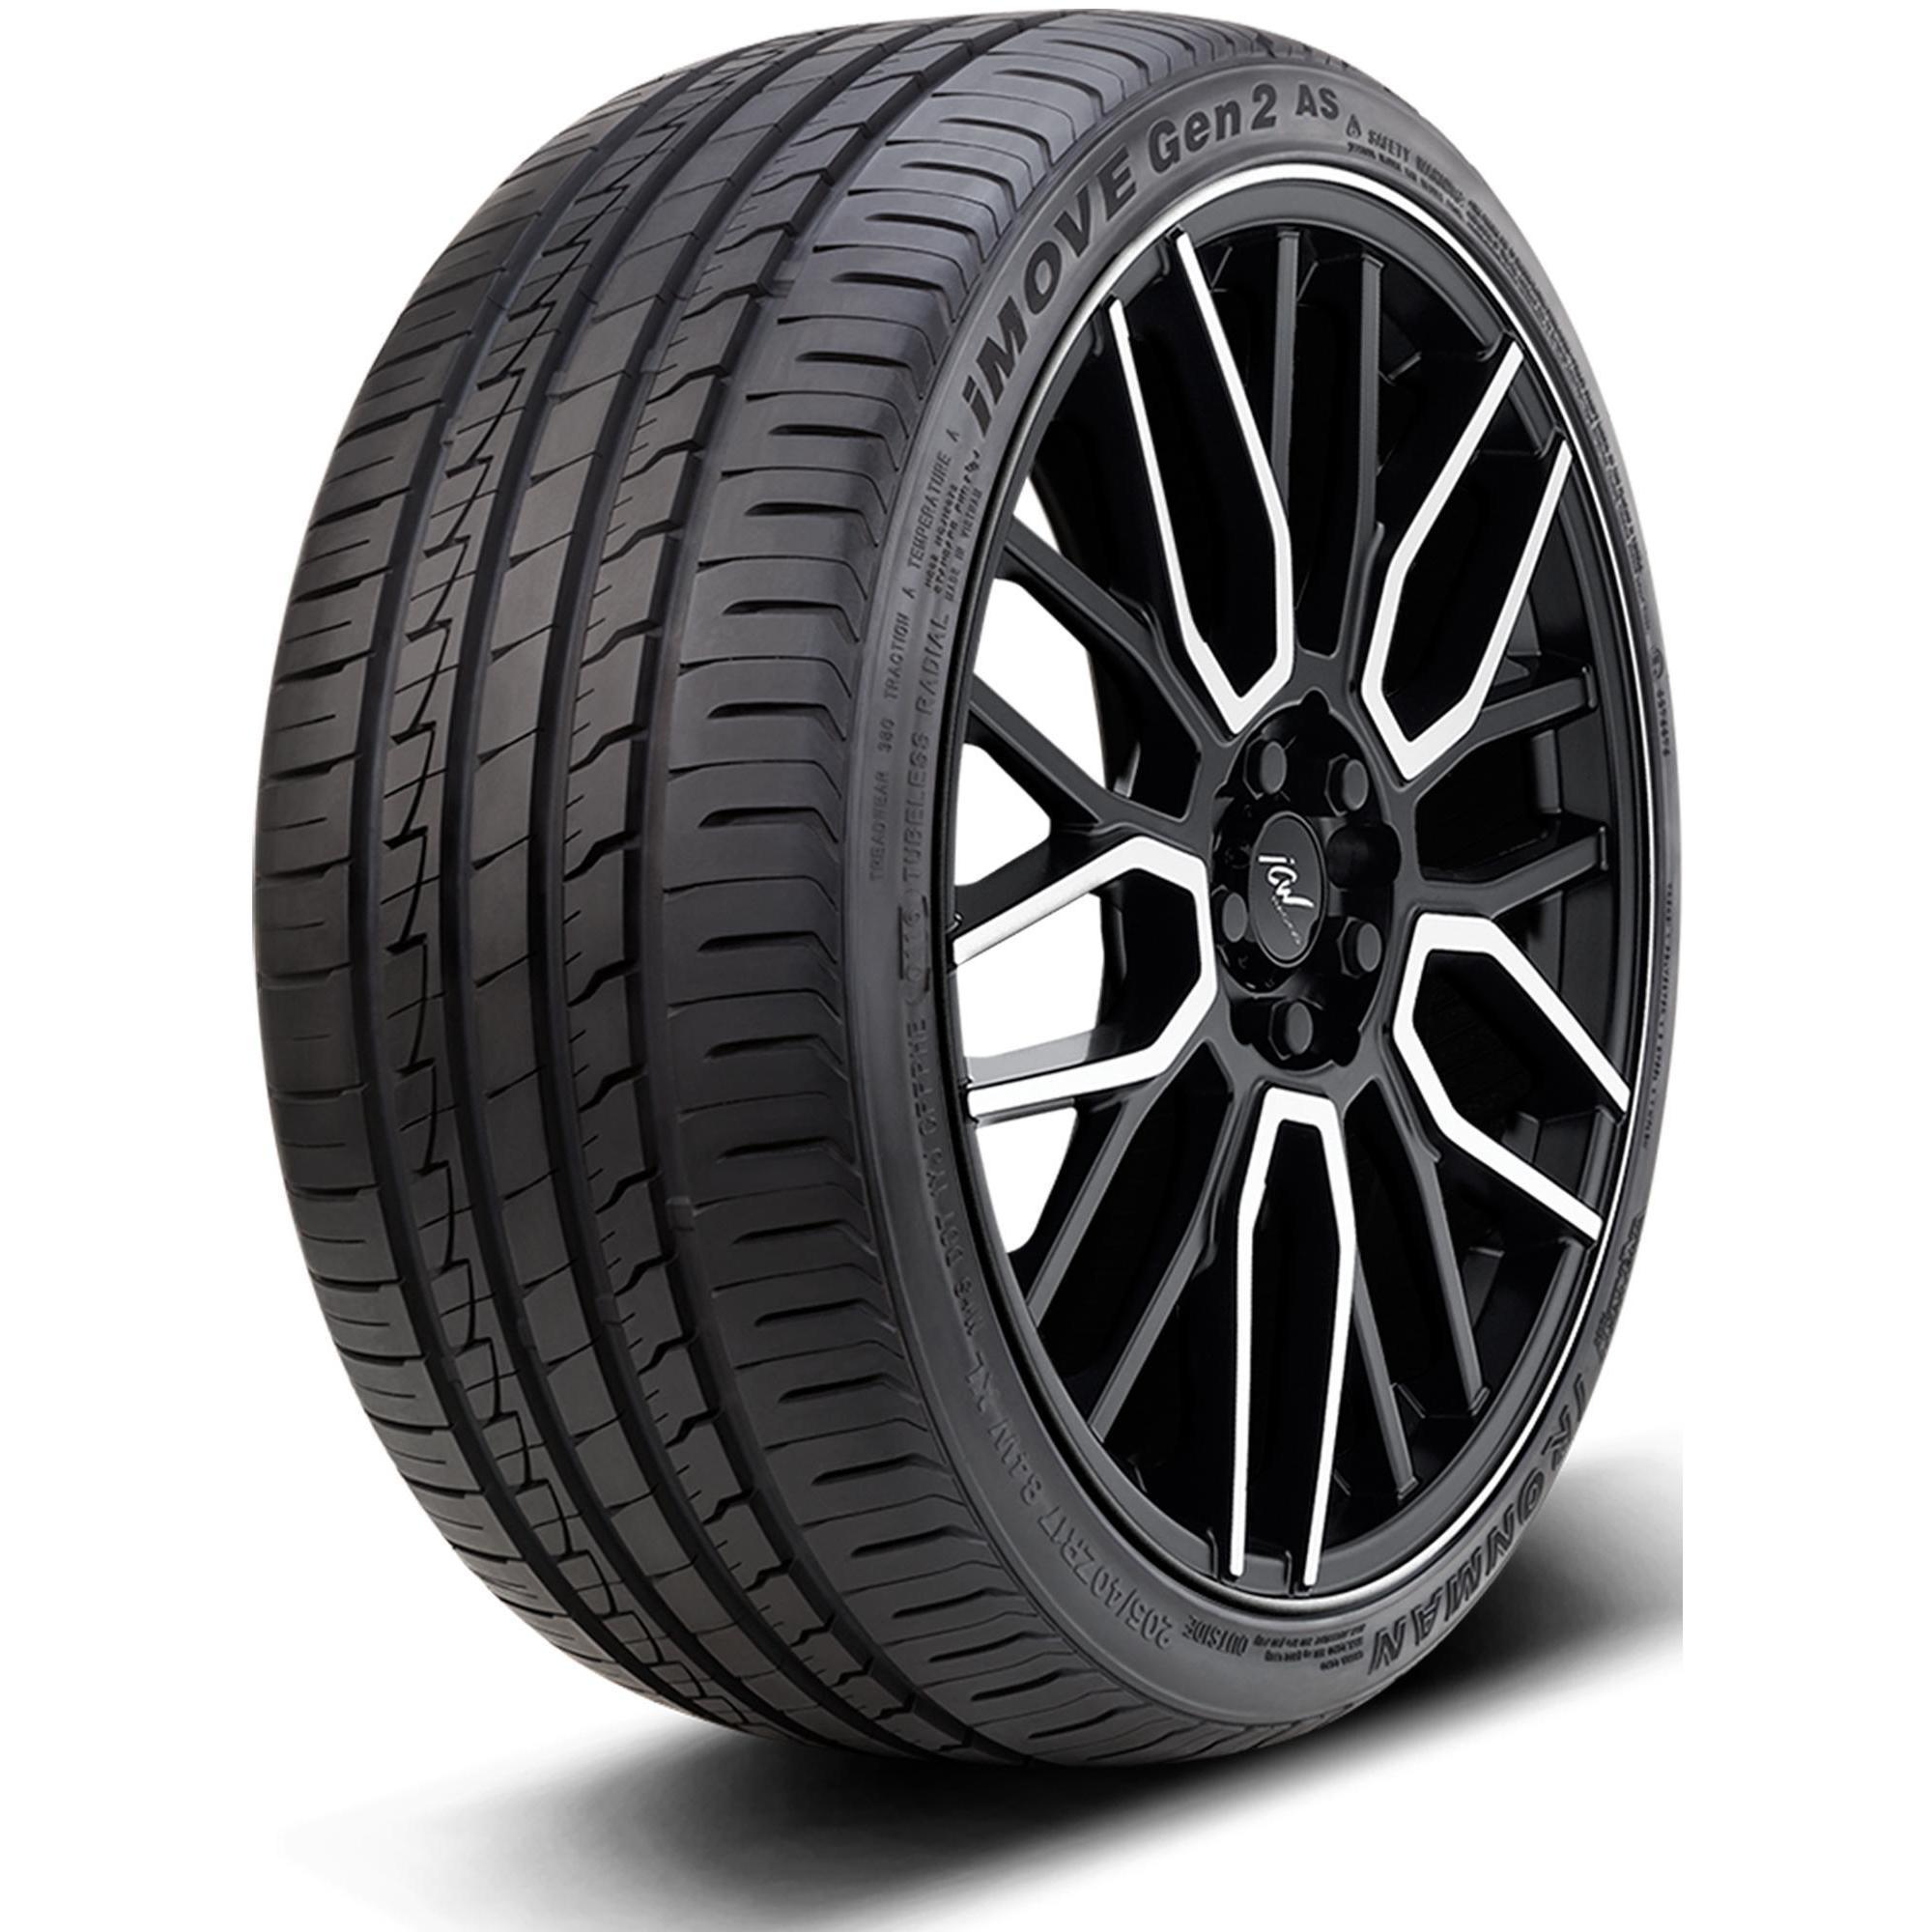 IRONMAN IMOVE GEN2 AS 185/55R15 (23X7.3R 15) Tires